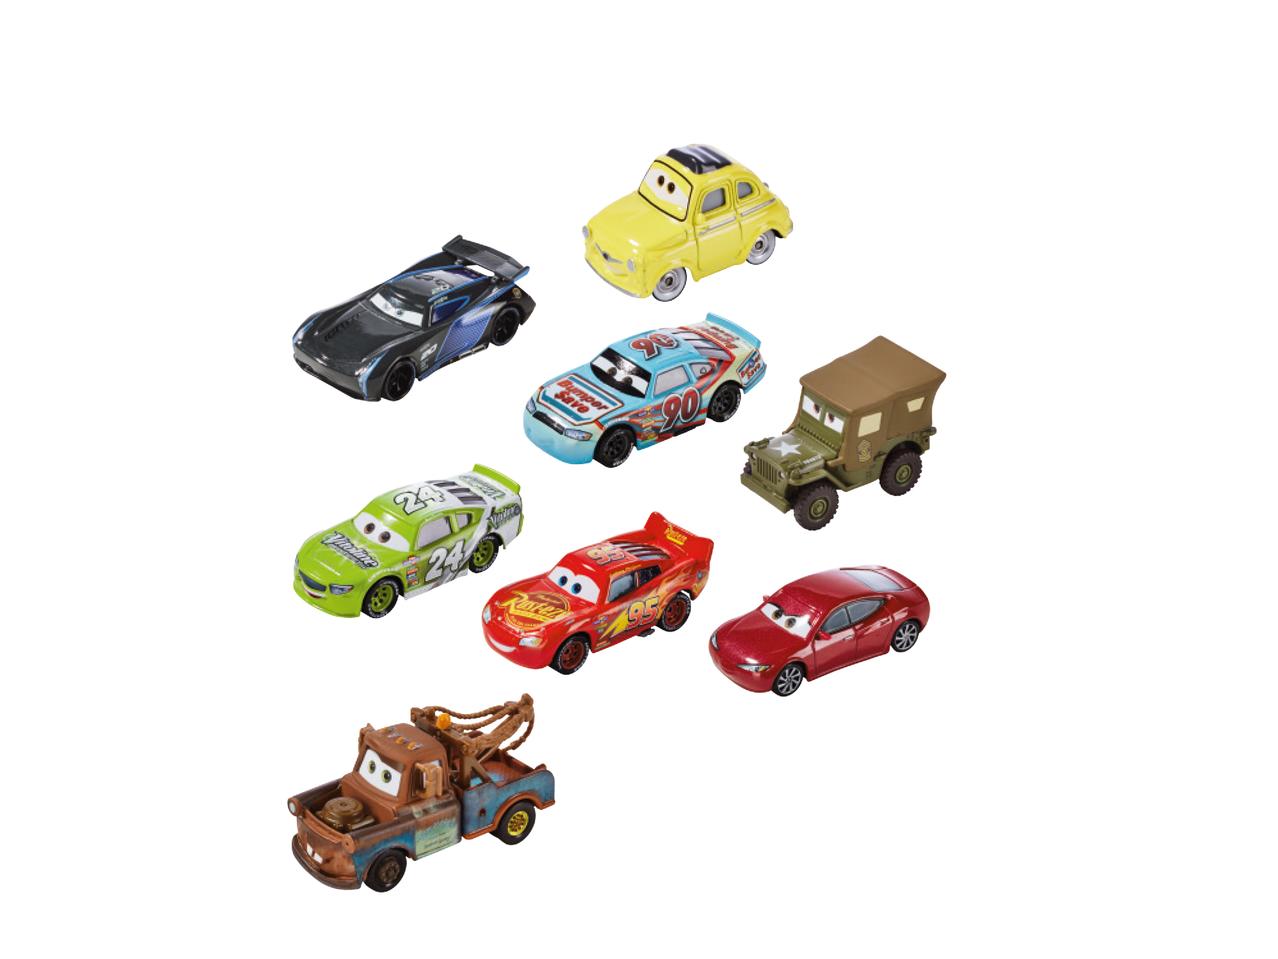 MATTEL "Cars" Die-Cast Character Cars